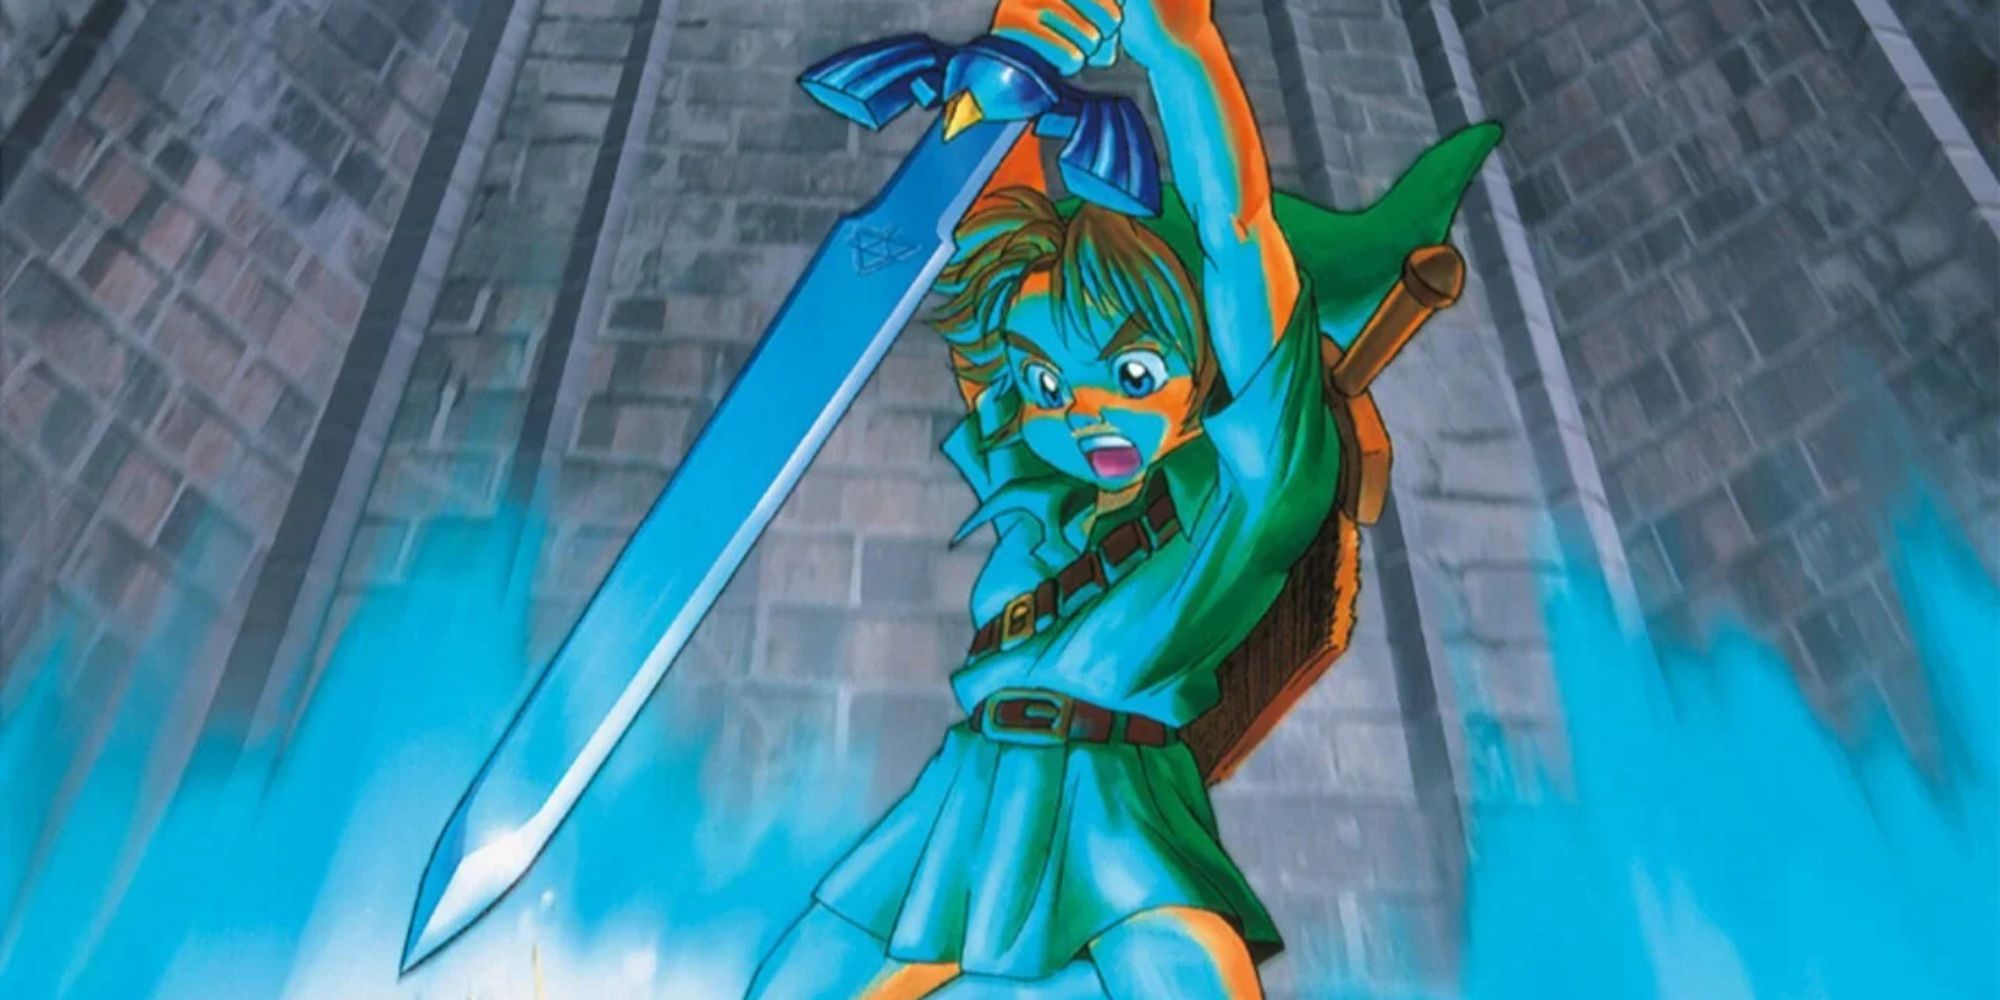 Link pulling the Master Sword in OOT artwork